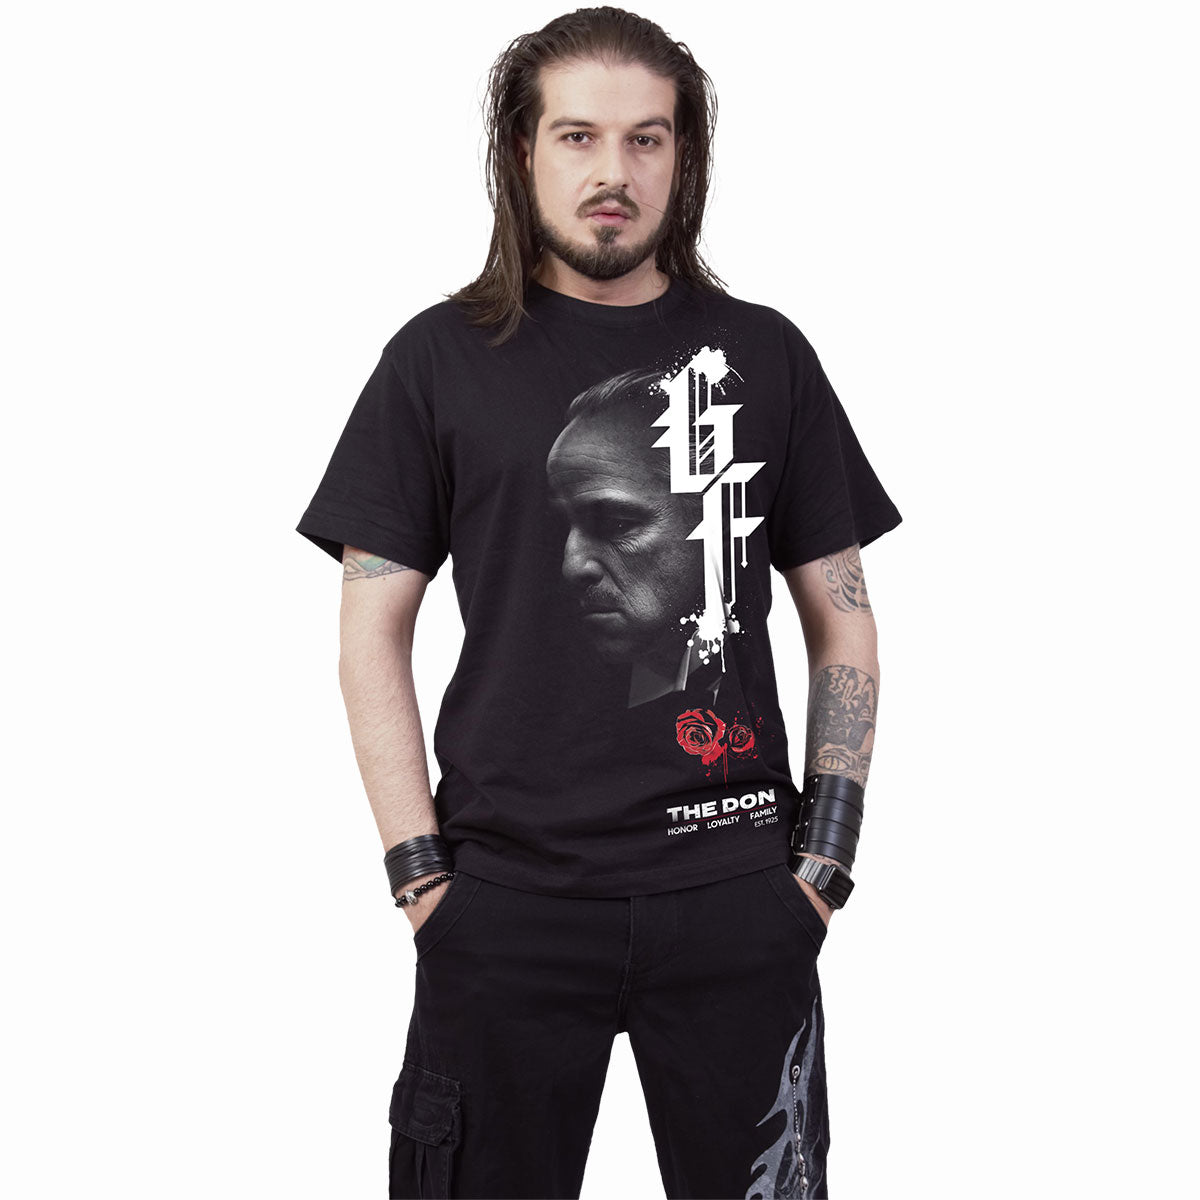 GODFATHER - DON - Front Print T-Shirt Black - Spiral USA